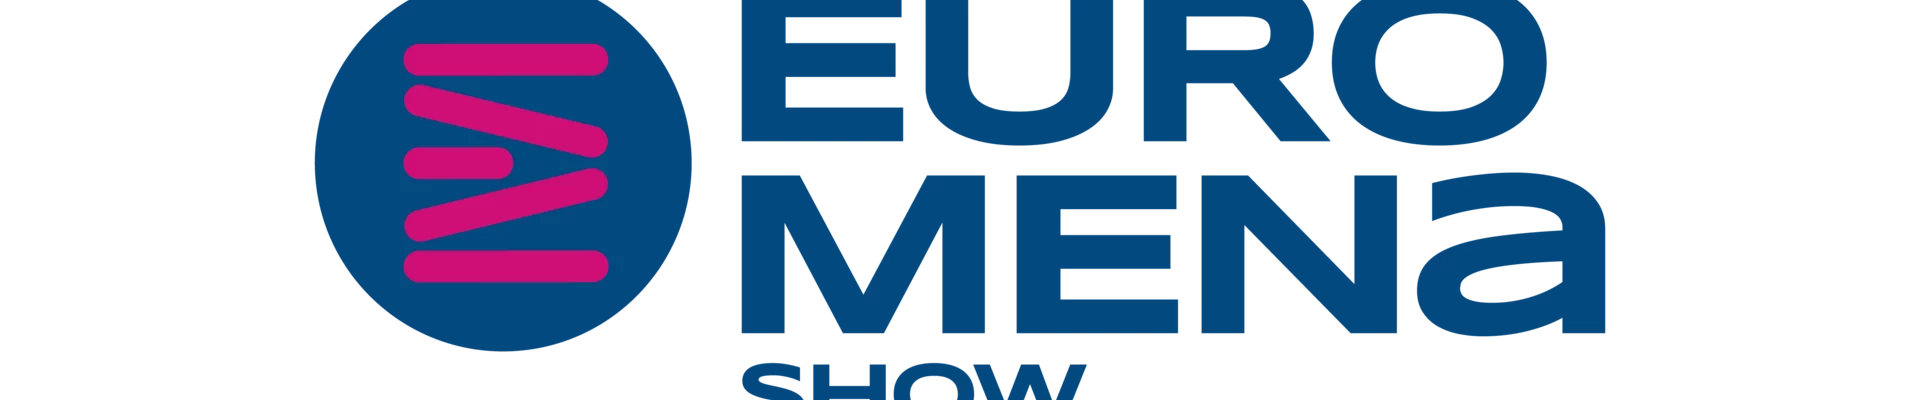 Euro Mena Show